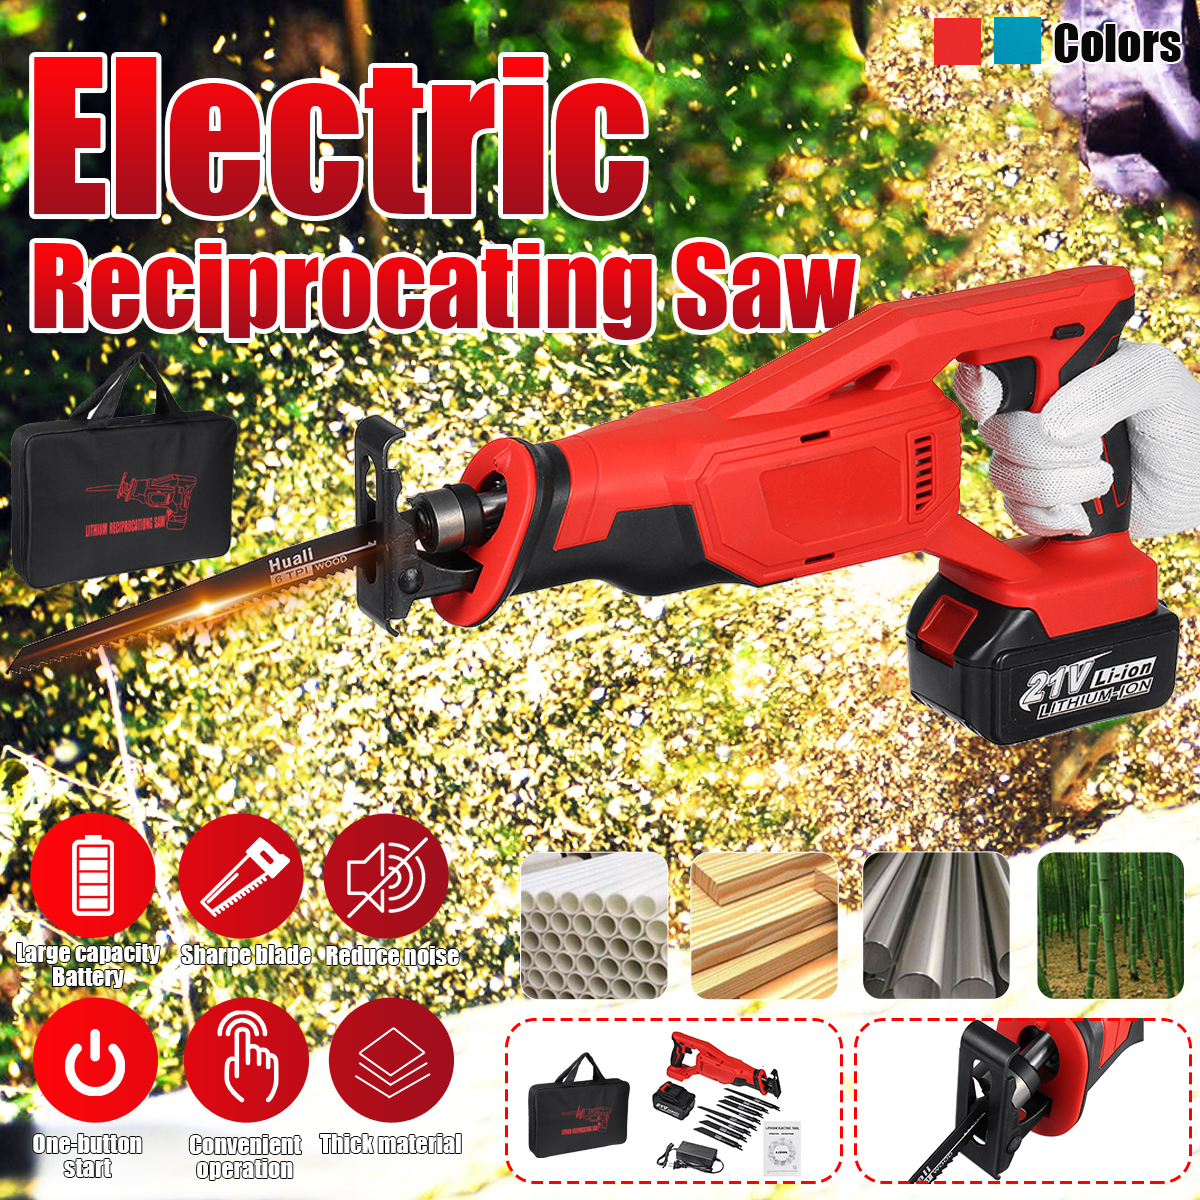 21V-1800mAH-Cordless-Reciprocating-Saw-5000Rpm-Branch-Saw-Electric-Professional-Recipro-Saw-W-8-Blad-1861677-1